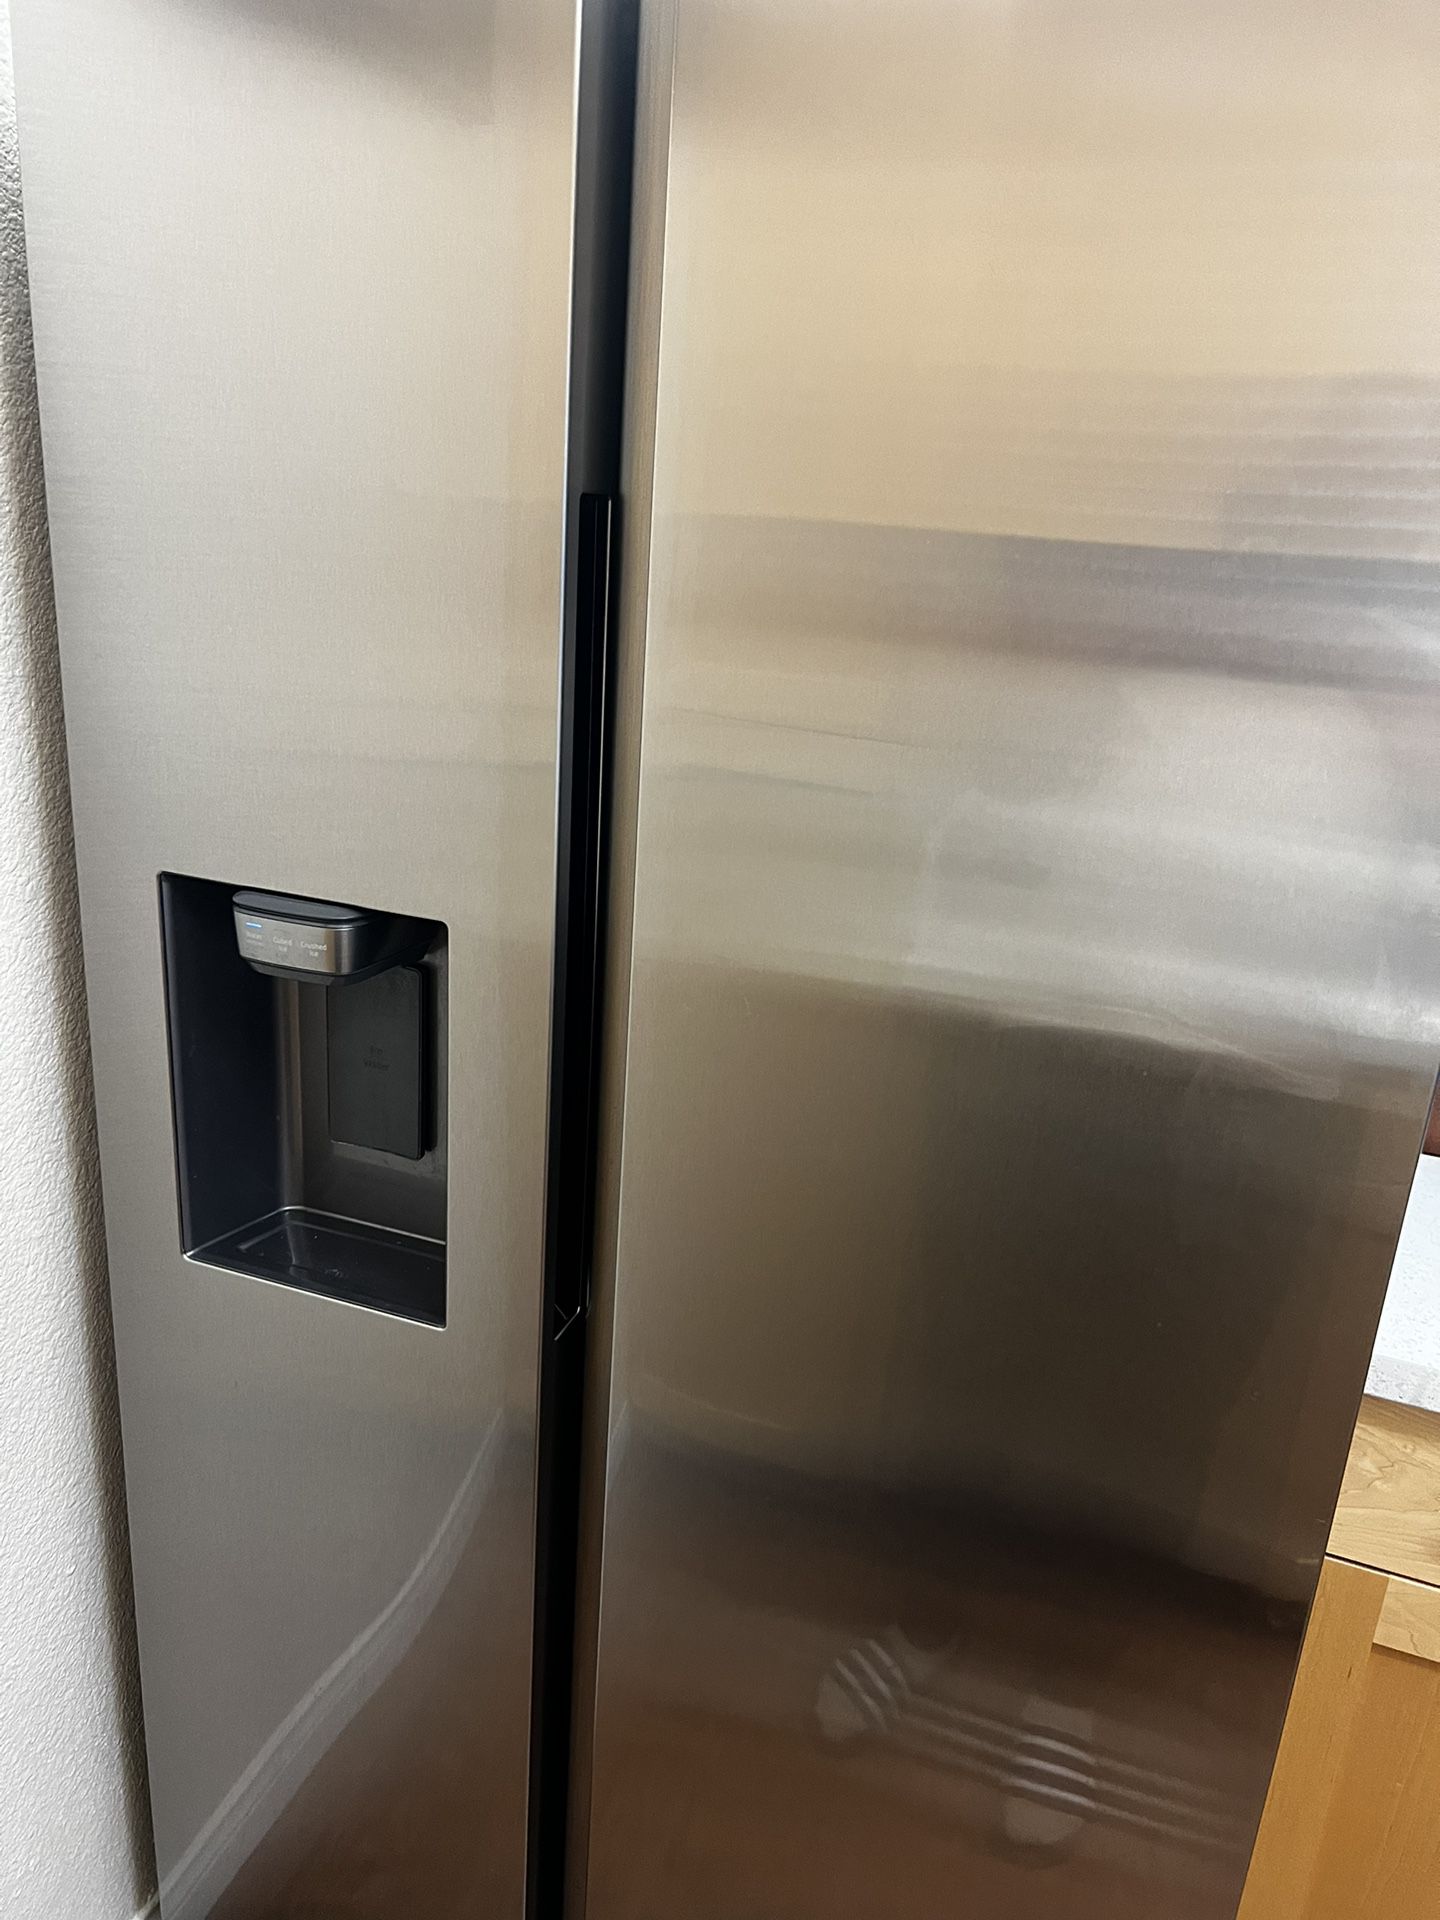 Stainless Steel Samsung Refrigerator 